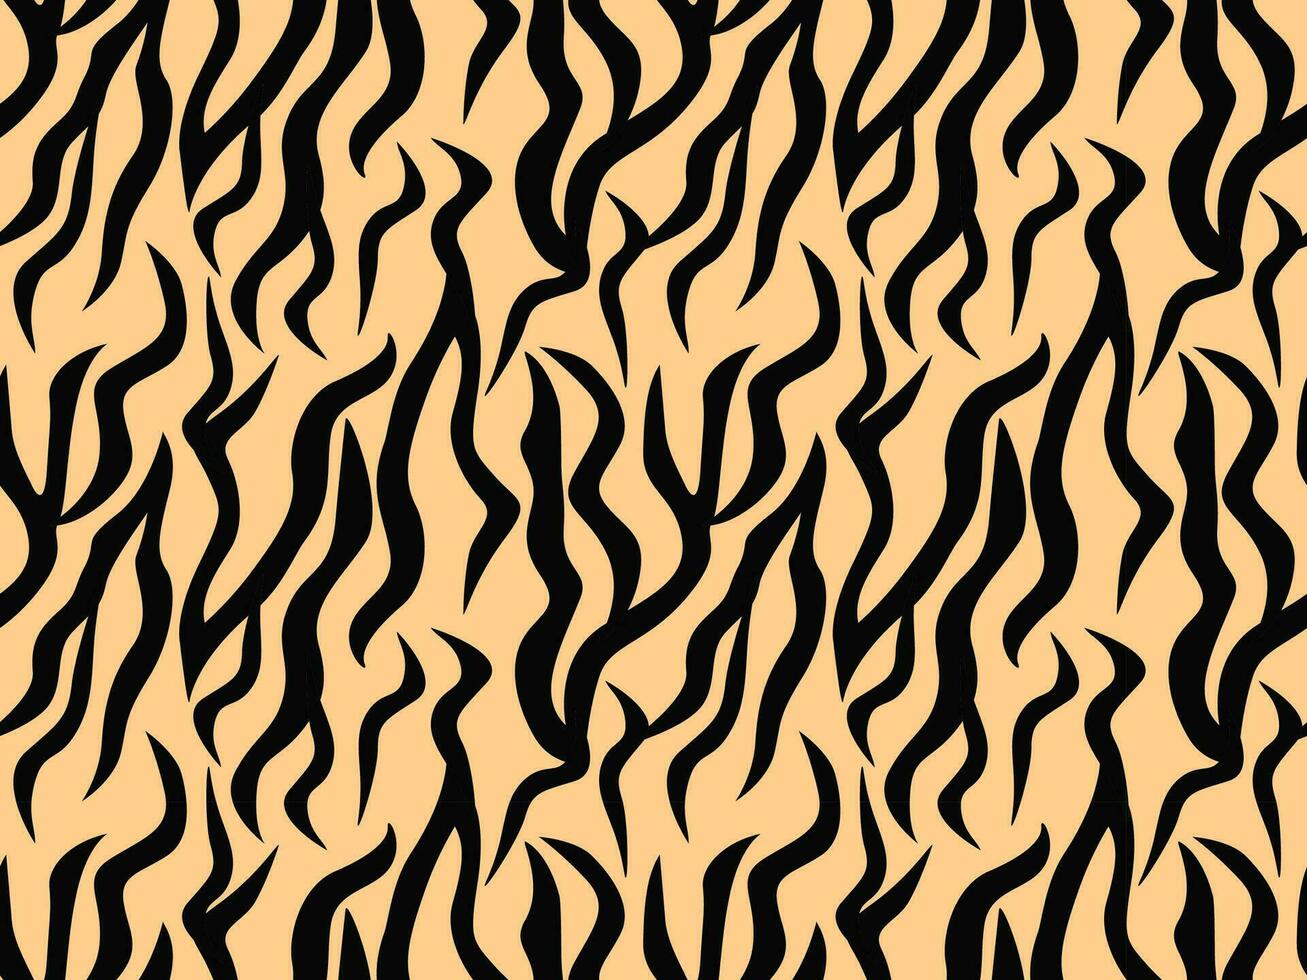 Abstract zebra seamless pattern. Animal skin texture, modern geometric background. Flat vector illustration.